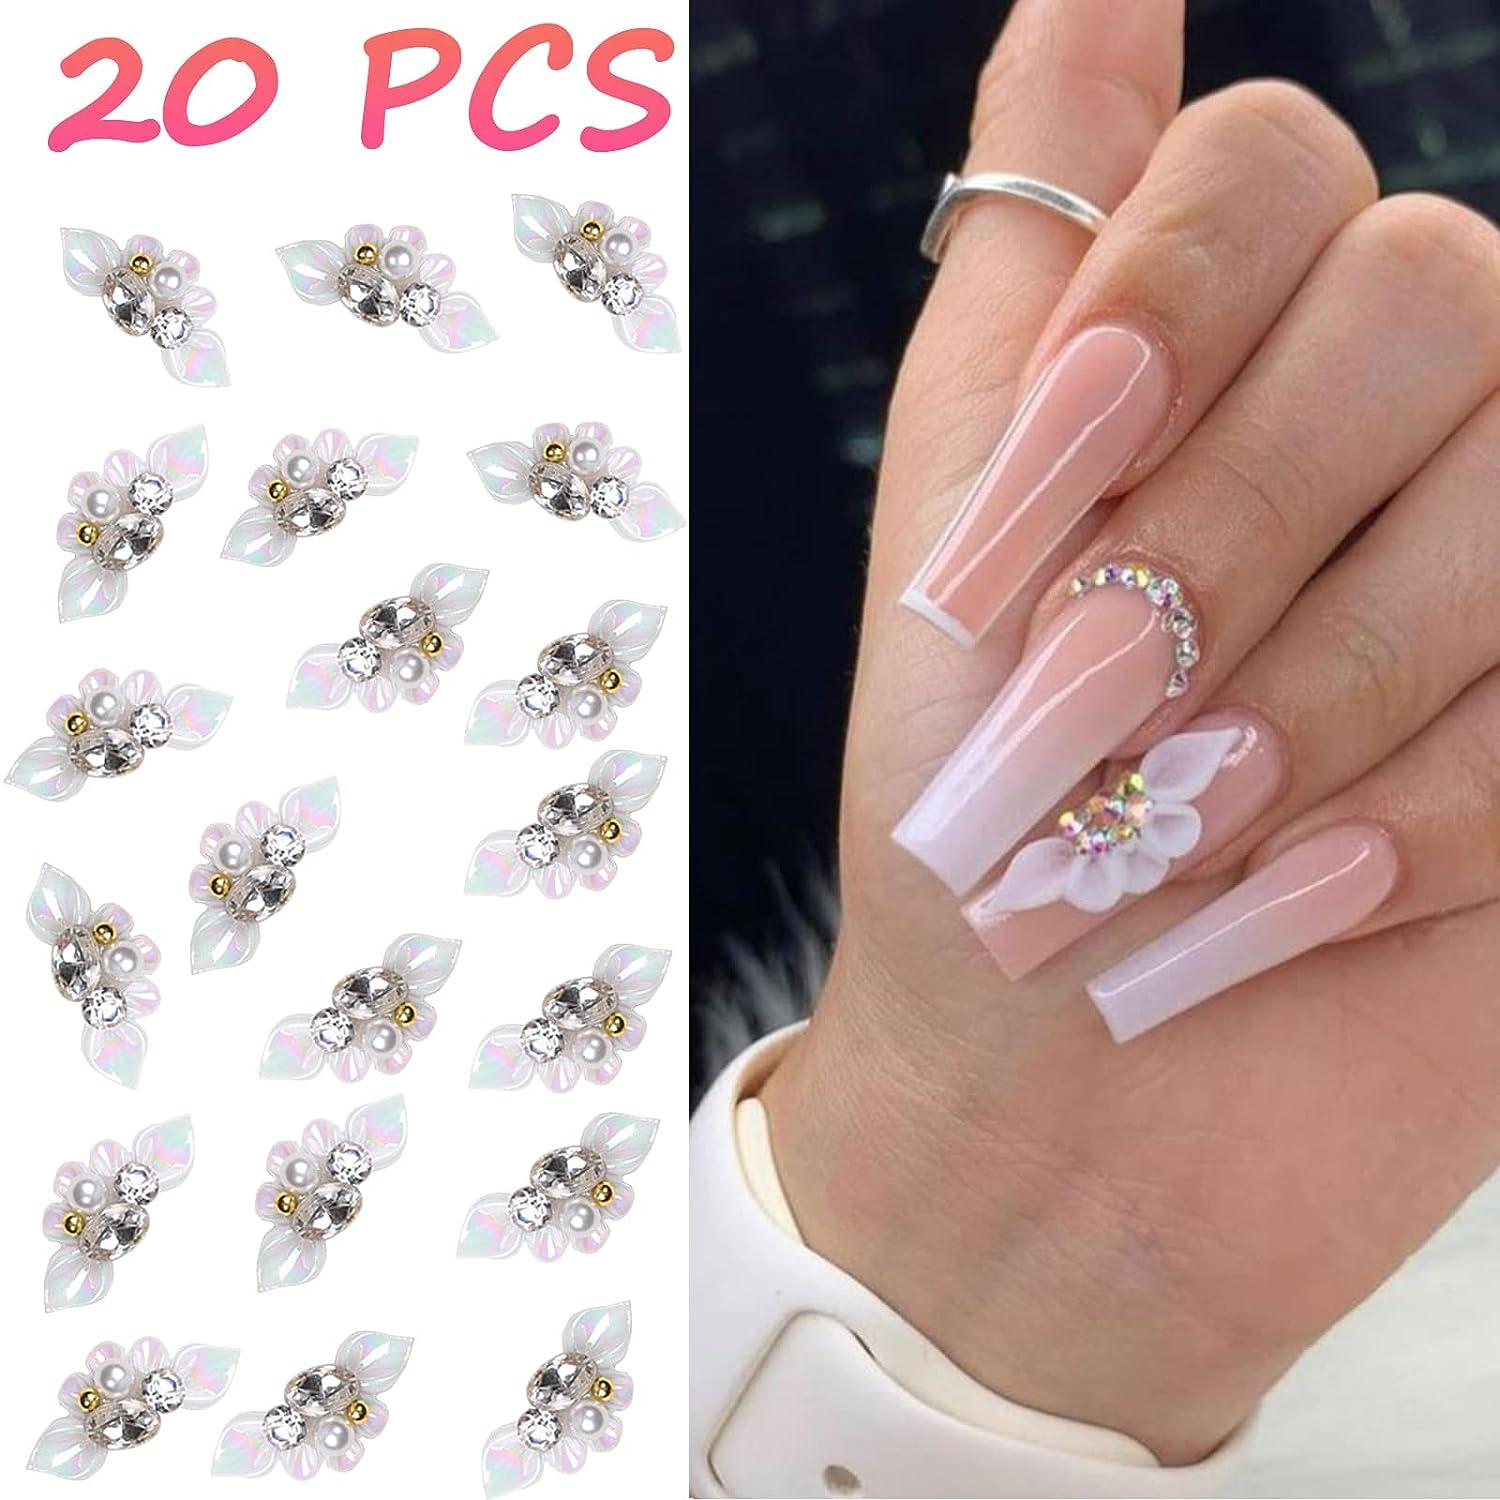 YOSOMMK 20PCS 3D Nail Charms Flower Nail Art Charms for Nail Gems and  Rhinestones for Nail Pearls Crystals Design Nail Art Decorations Nail Jewels  Accessories DIY Acrylic Nail Supplie White Flower Nail